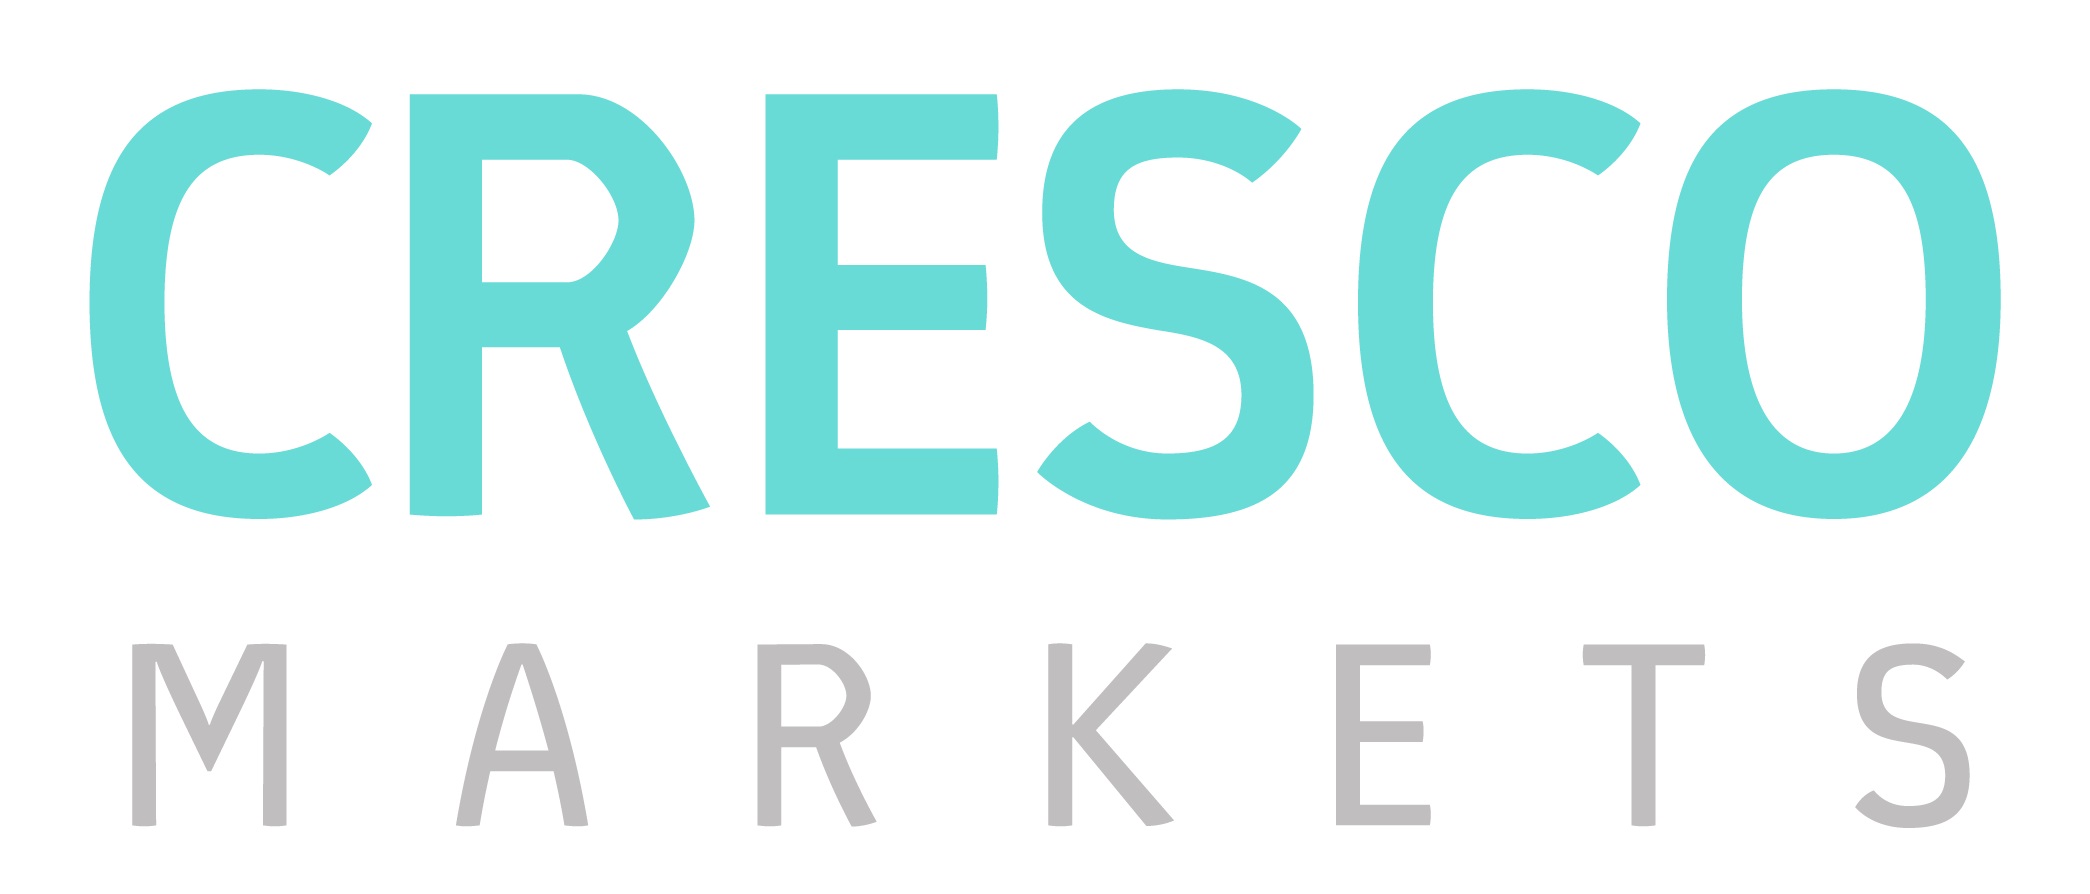 Cresco Markets - Logo.jpg.jpg